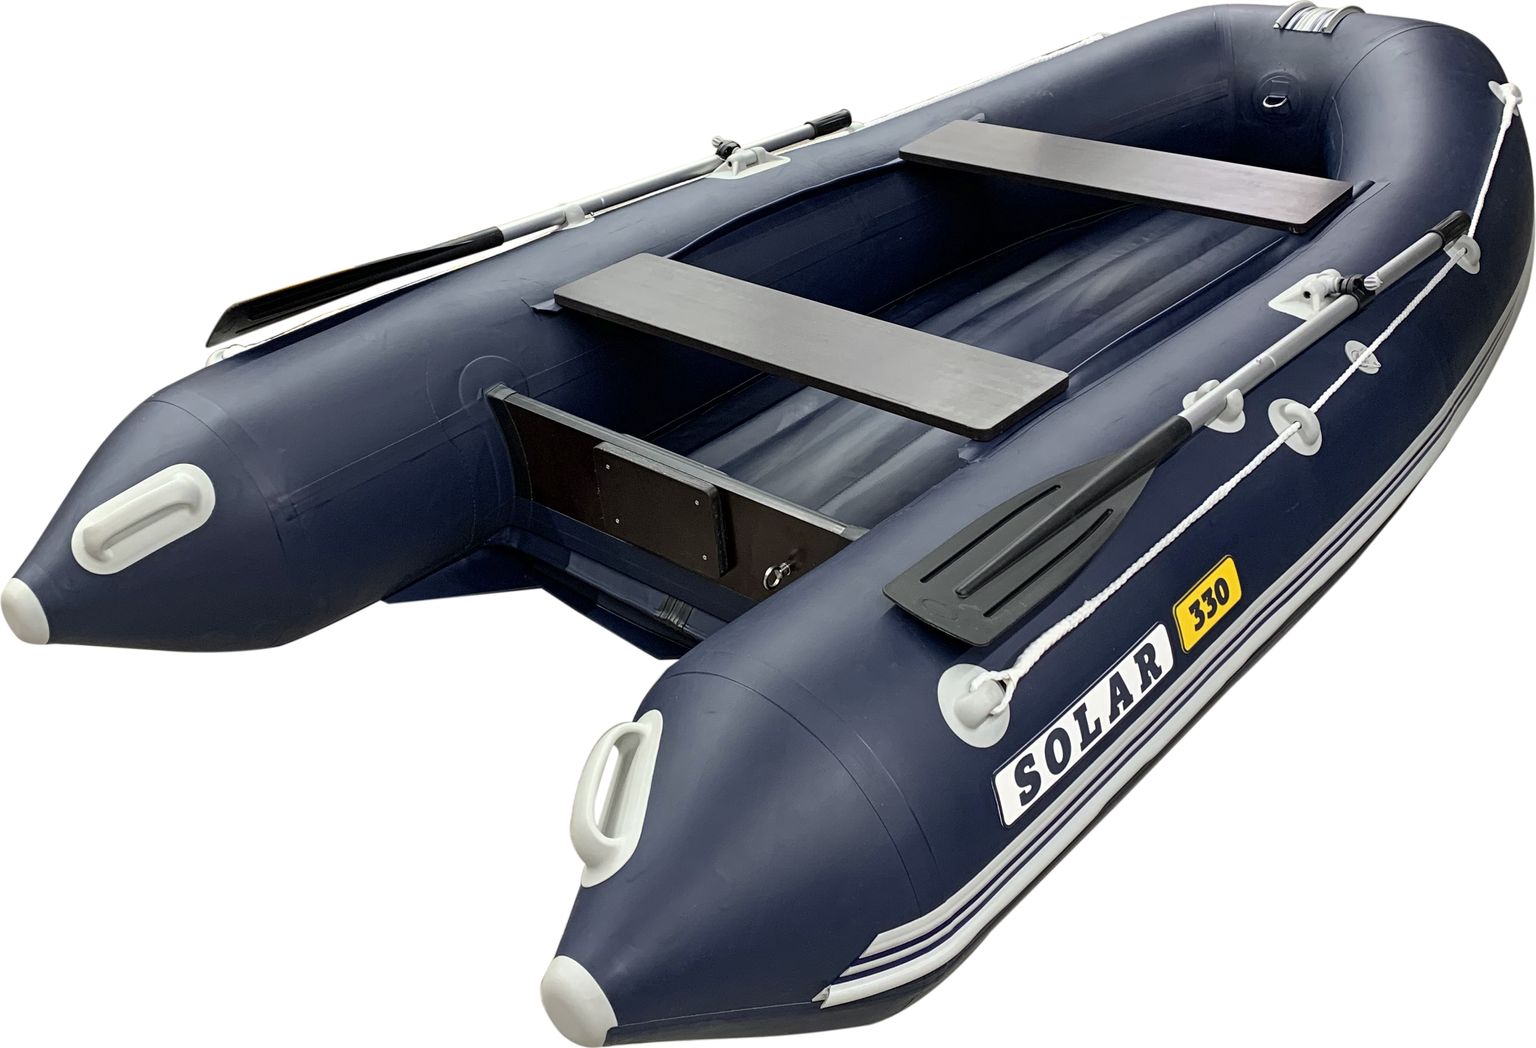 Надувная лодка ПВХ SOLAR-330 К (Оптима), синий SLR330k_opt_blue надувная лодка пвх solar 330 к оптима синий slr330k opt blue